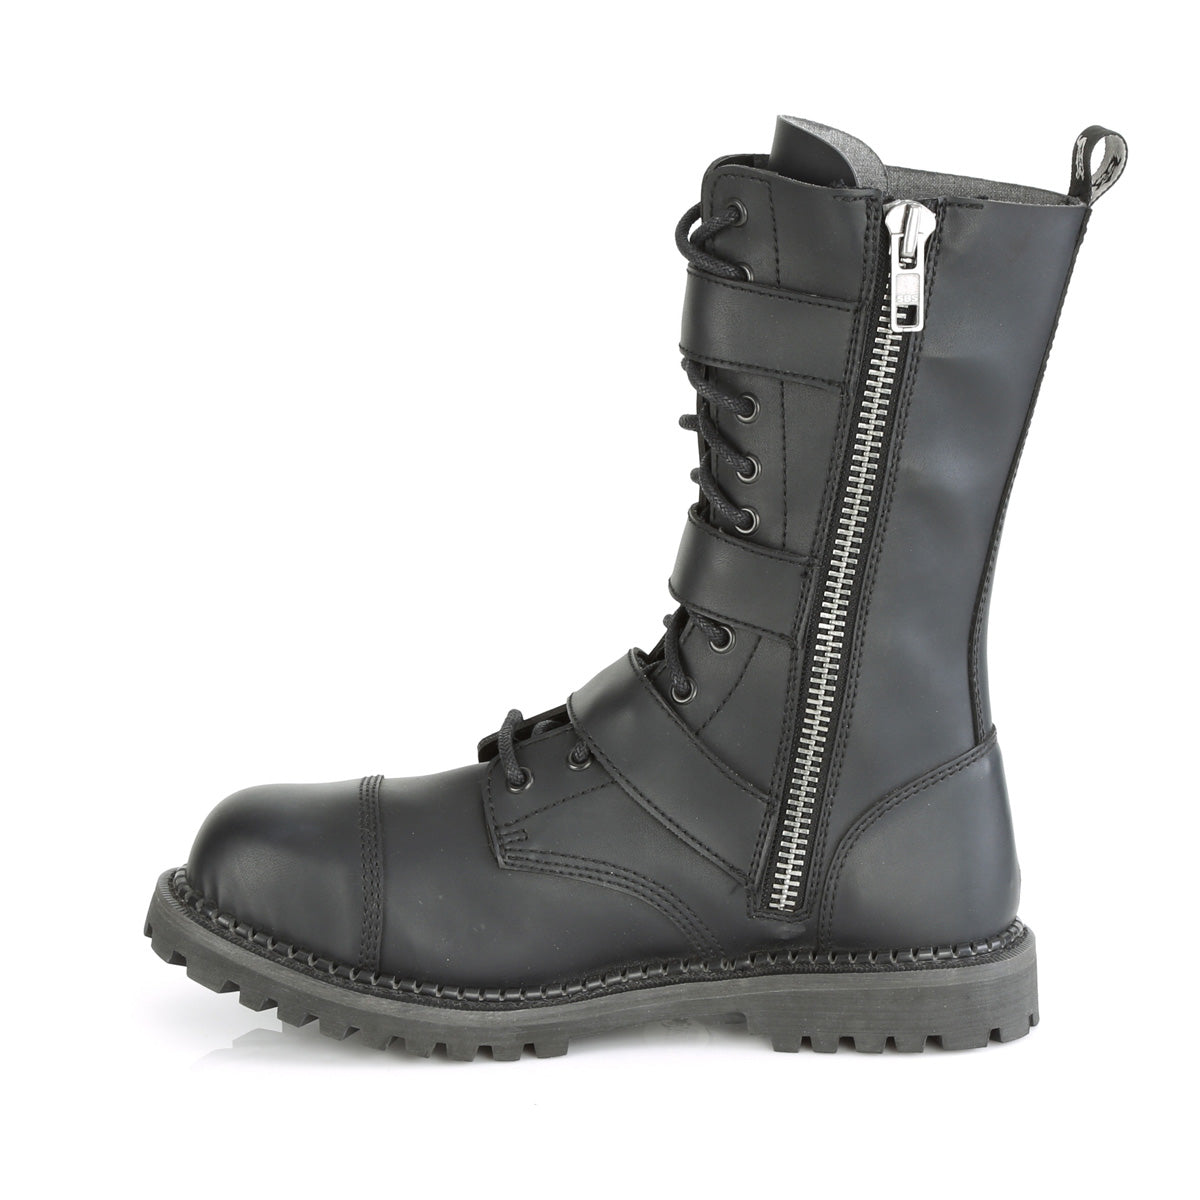 RIOT-12BK Black Ankle Boots